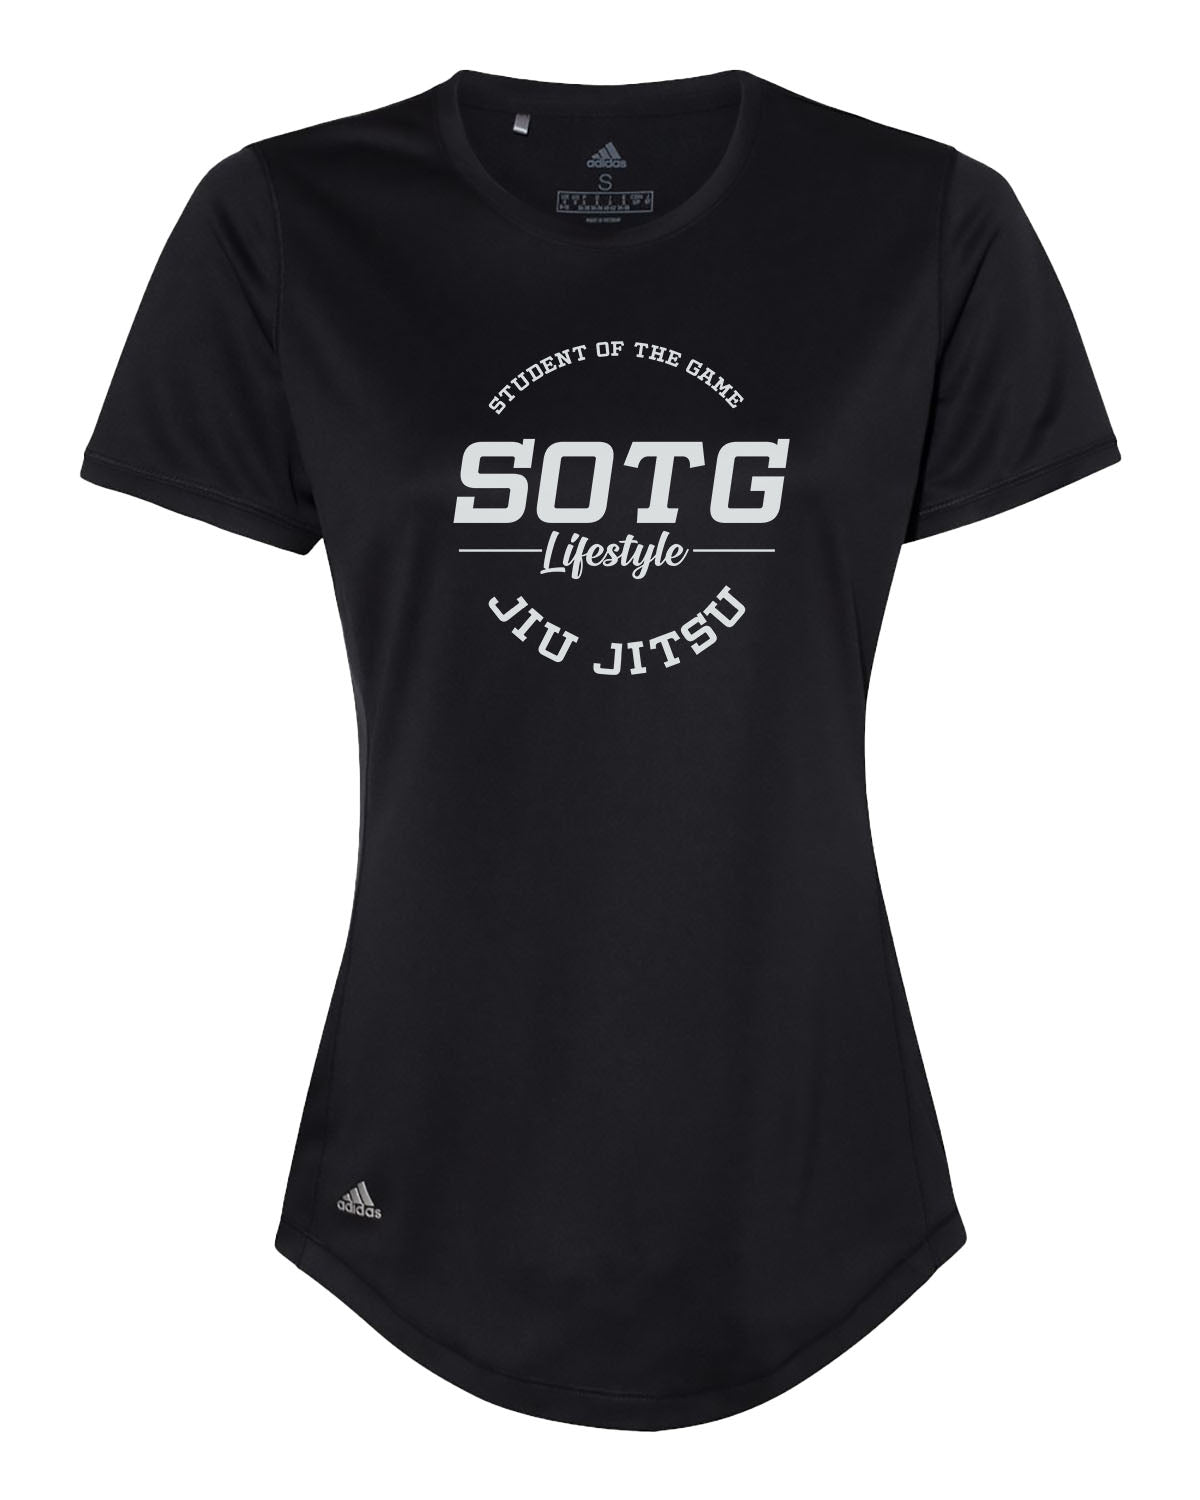 SOTG Lifestyle // Women's Performance Tee - Adidas